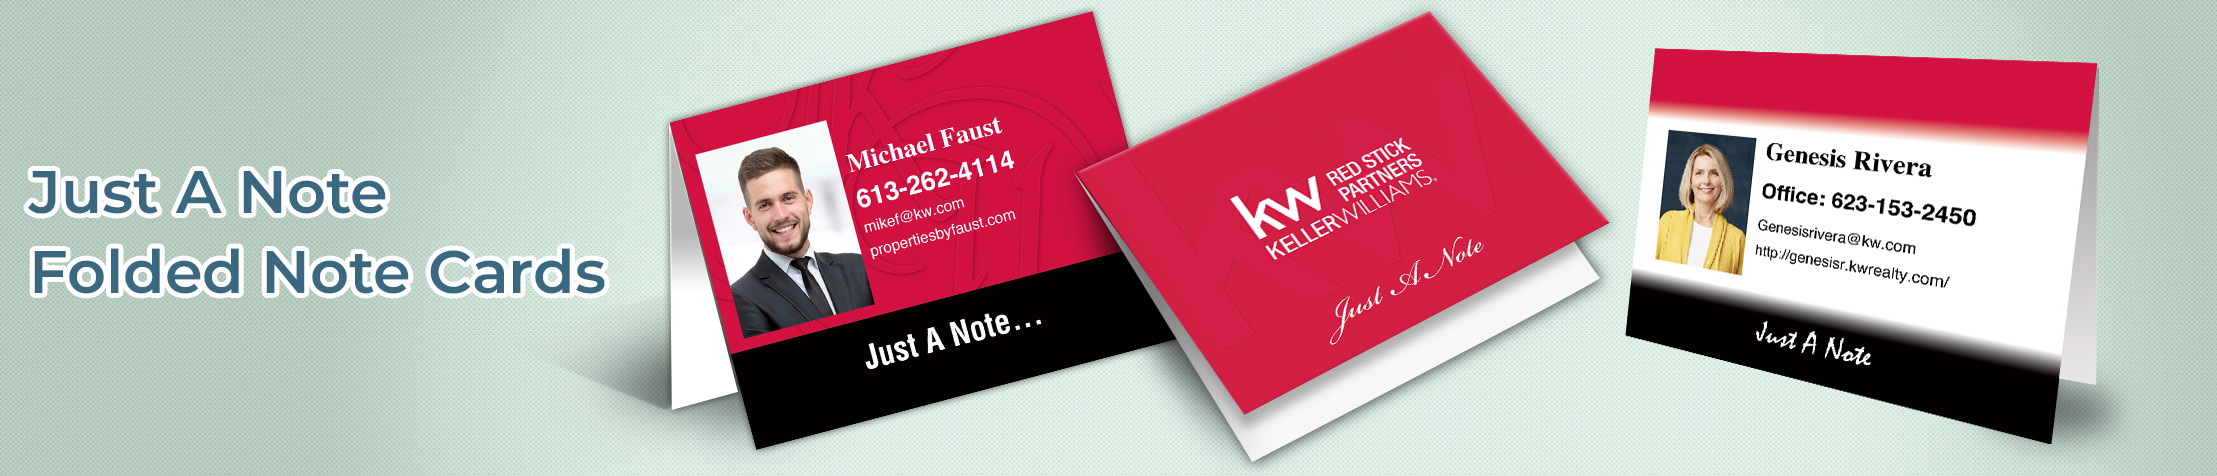 Keller Williams Real Estate Just a Note Folded Note Cards - KW approved vendor note card stationery | BestPrintBuy.com